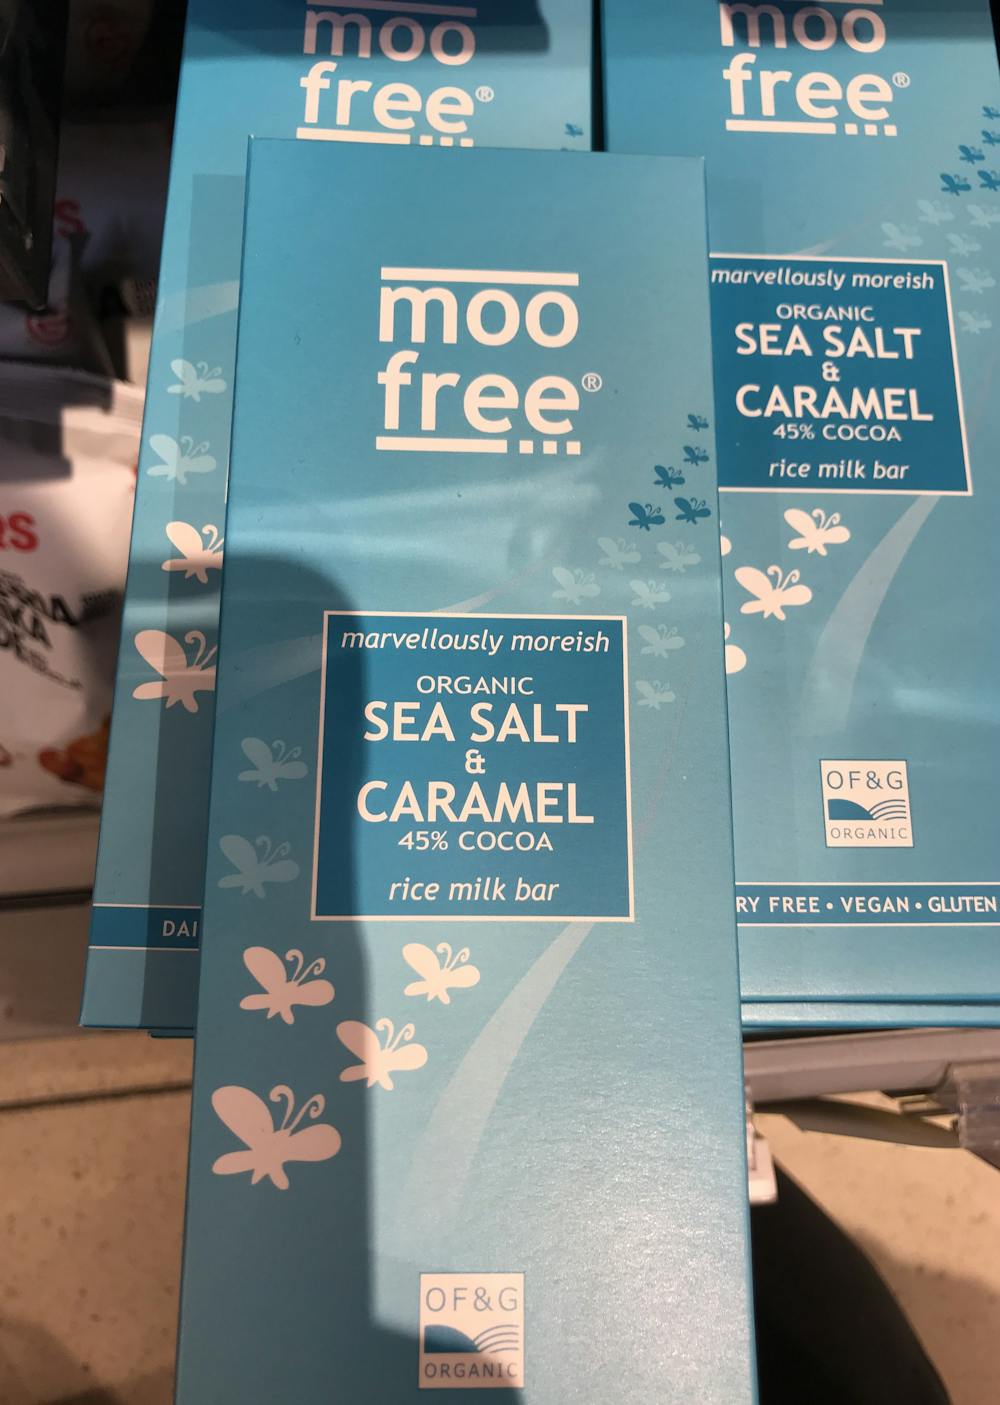 Rice milk bar, sea salt & caramel, Moo free